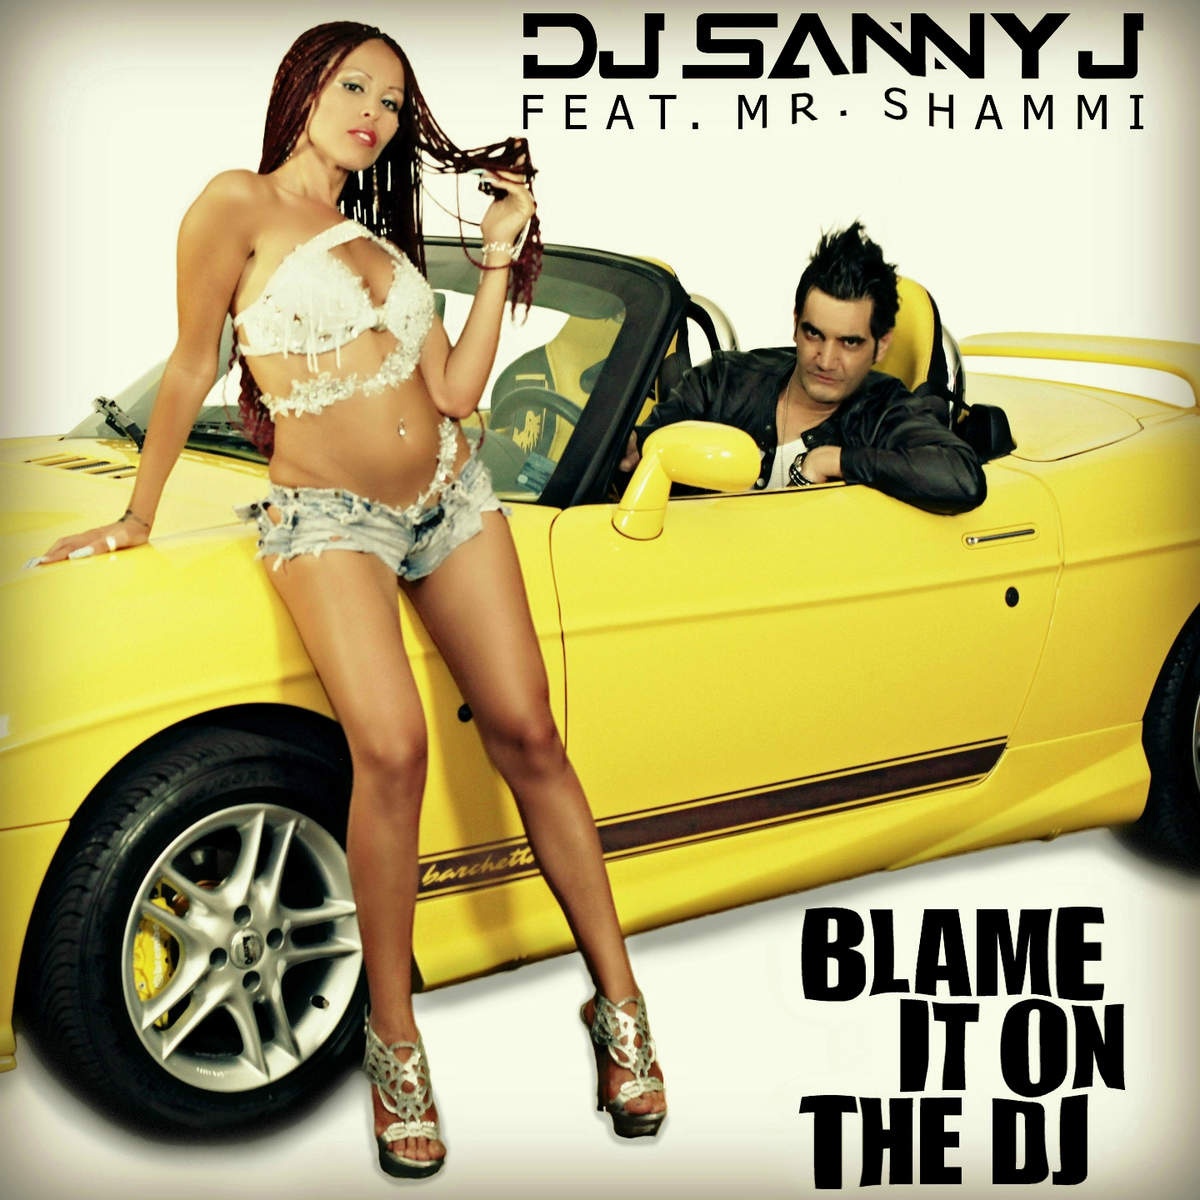 Blame It On the DJ